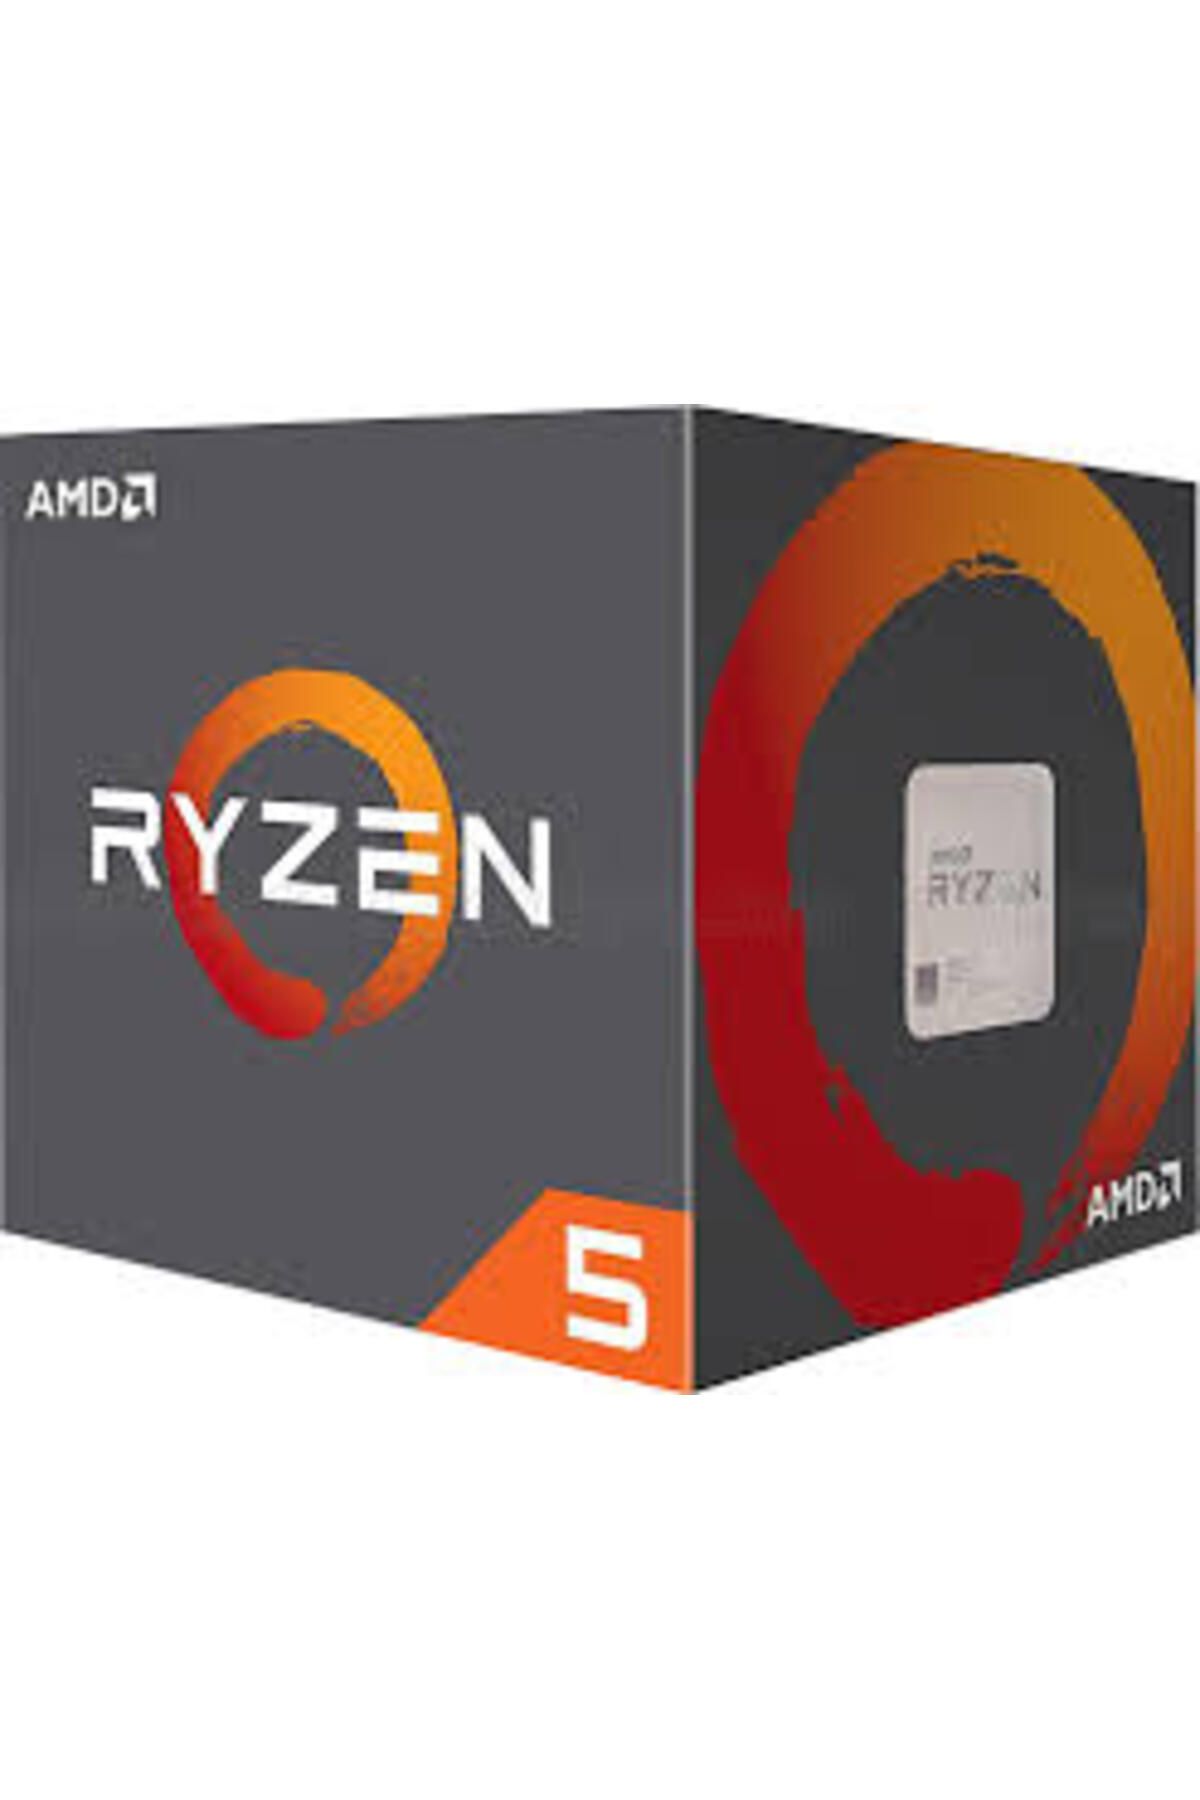 Universal AMD Ryzen 5 1600 Soket AM4 3.4GHz - 3.6GHz 19MB 65W 12nm İşlemci NOVGA